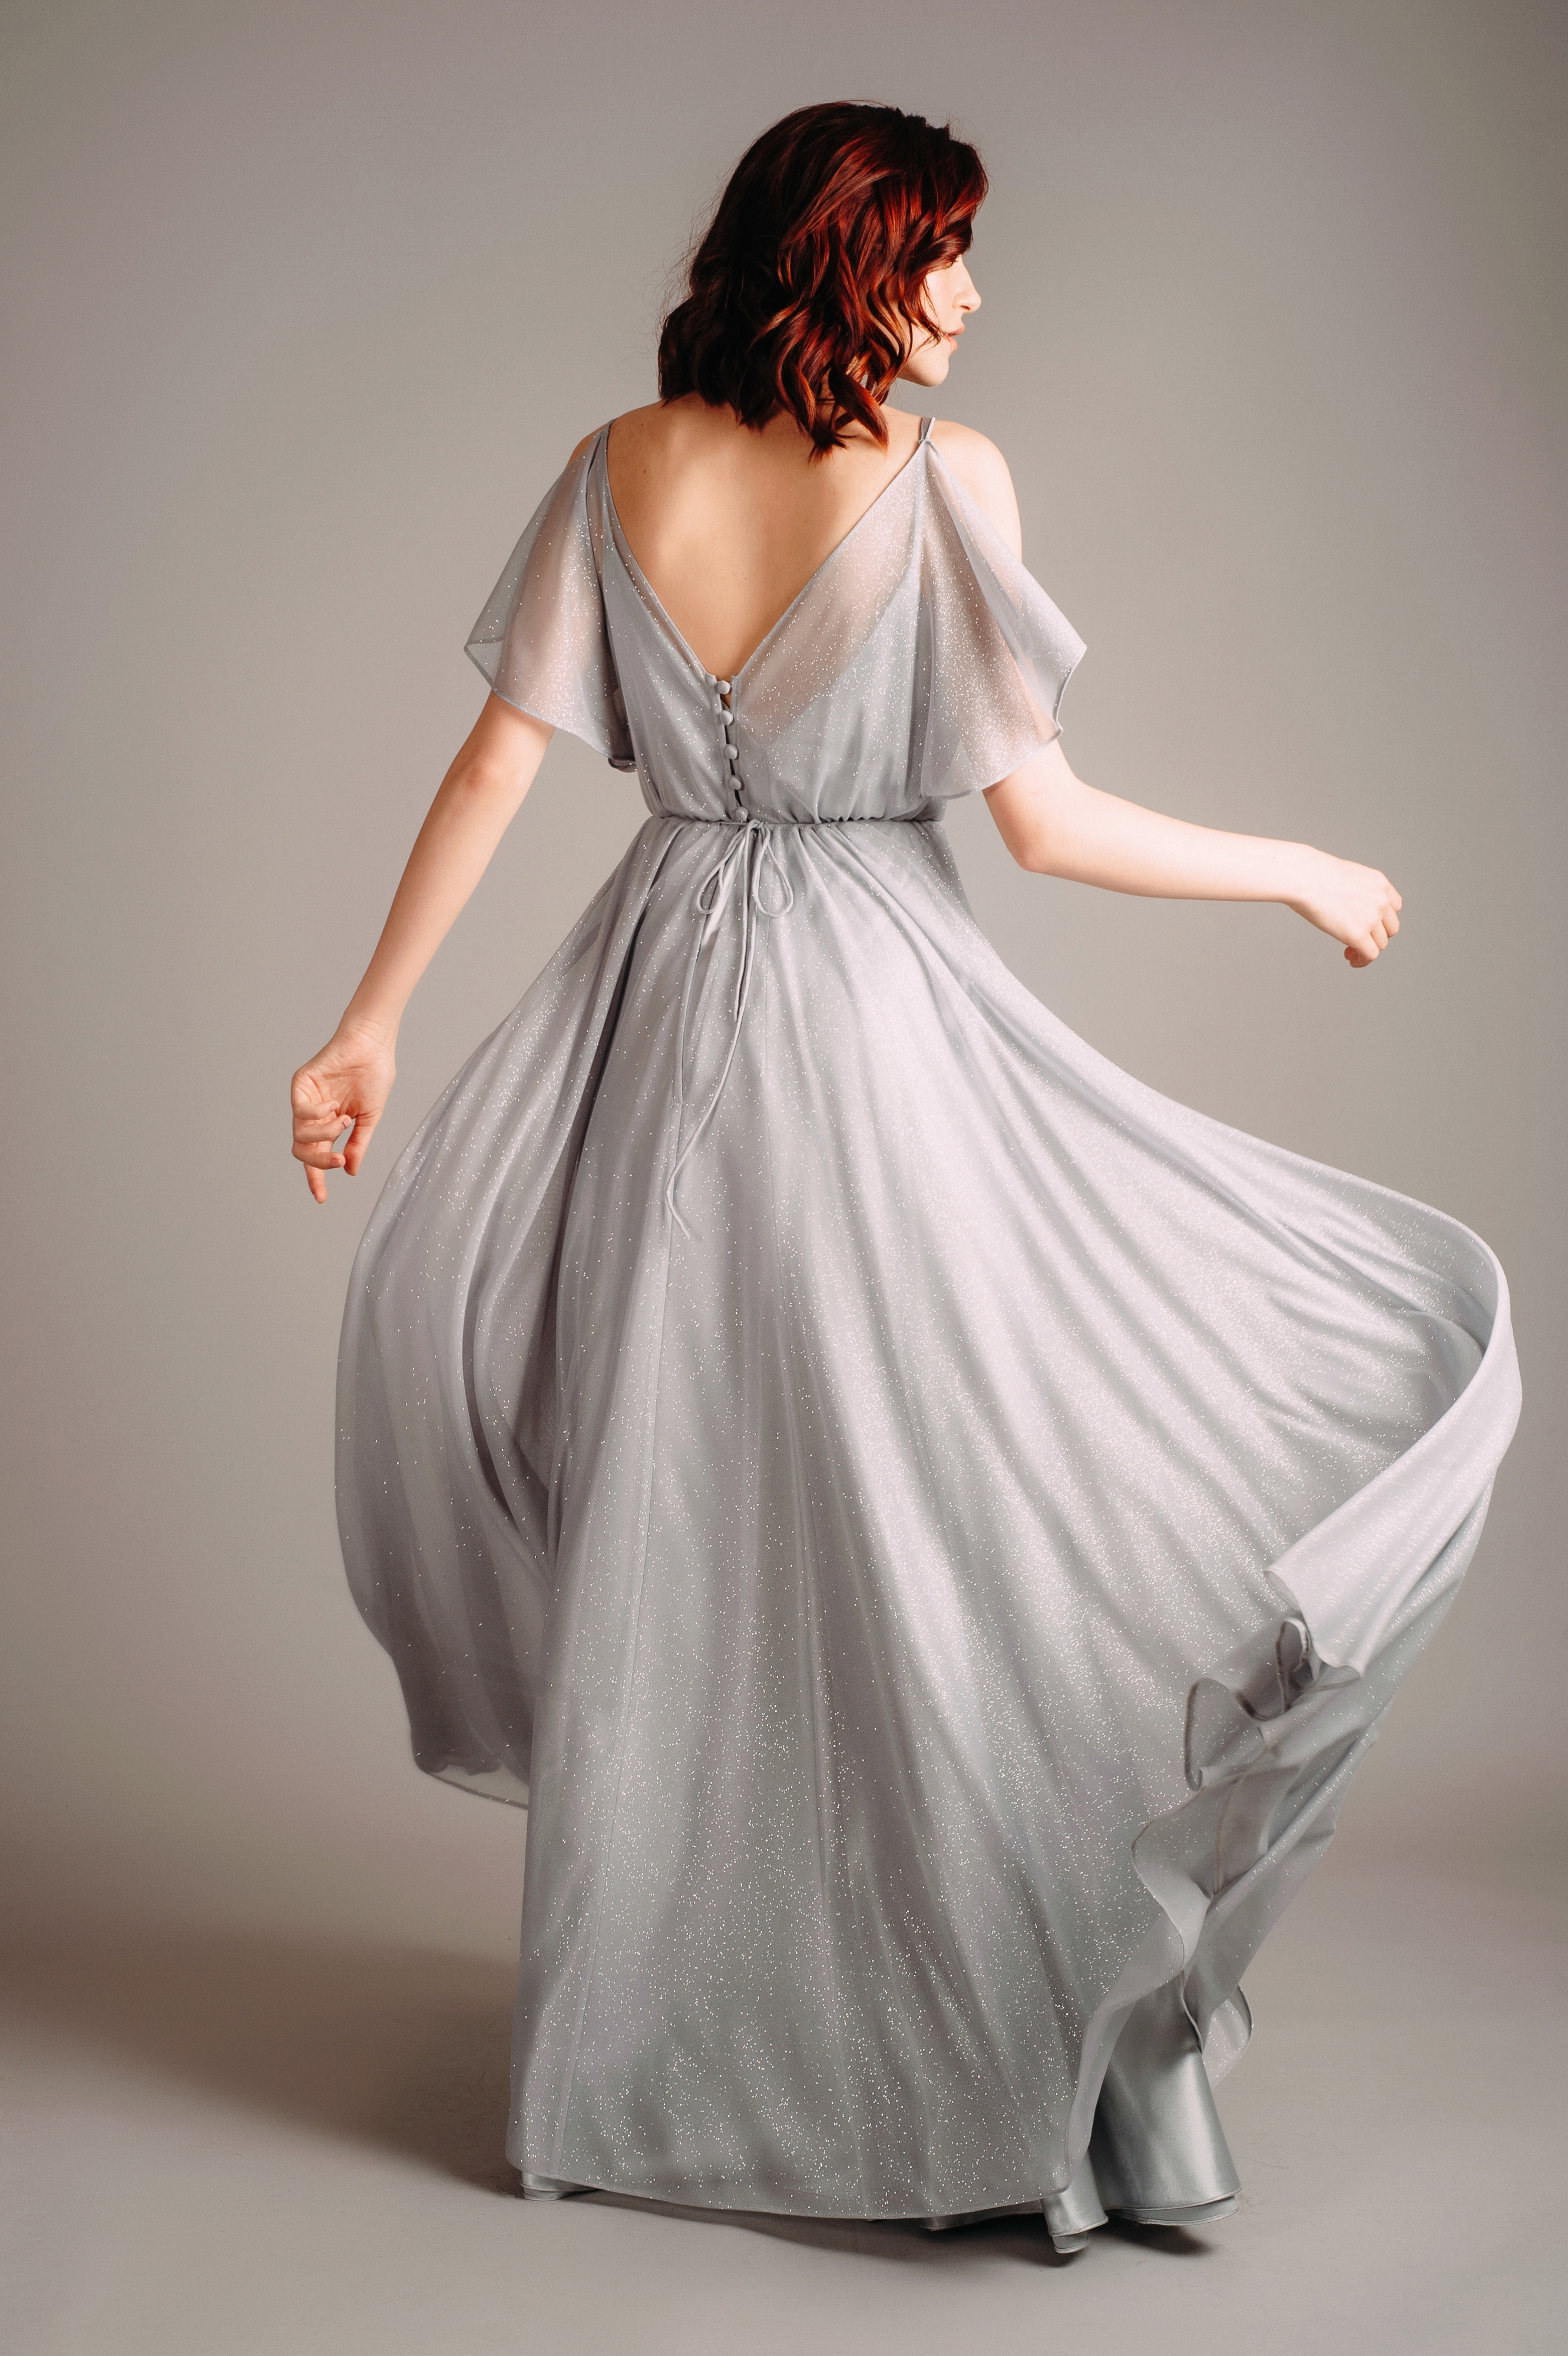 A woman wearing a bridesmaid dress | Source: Shutterstock